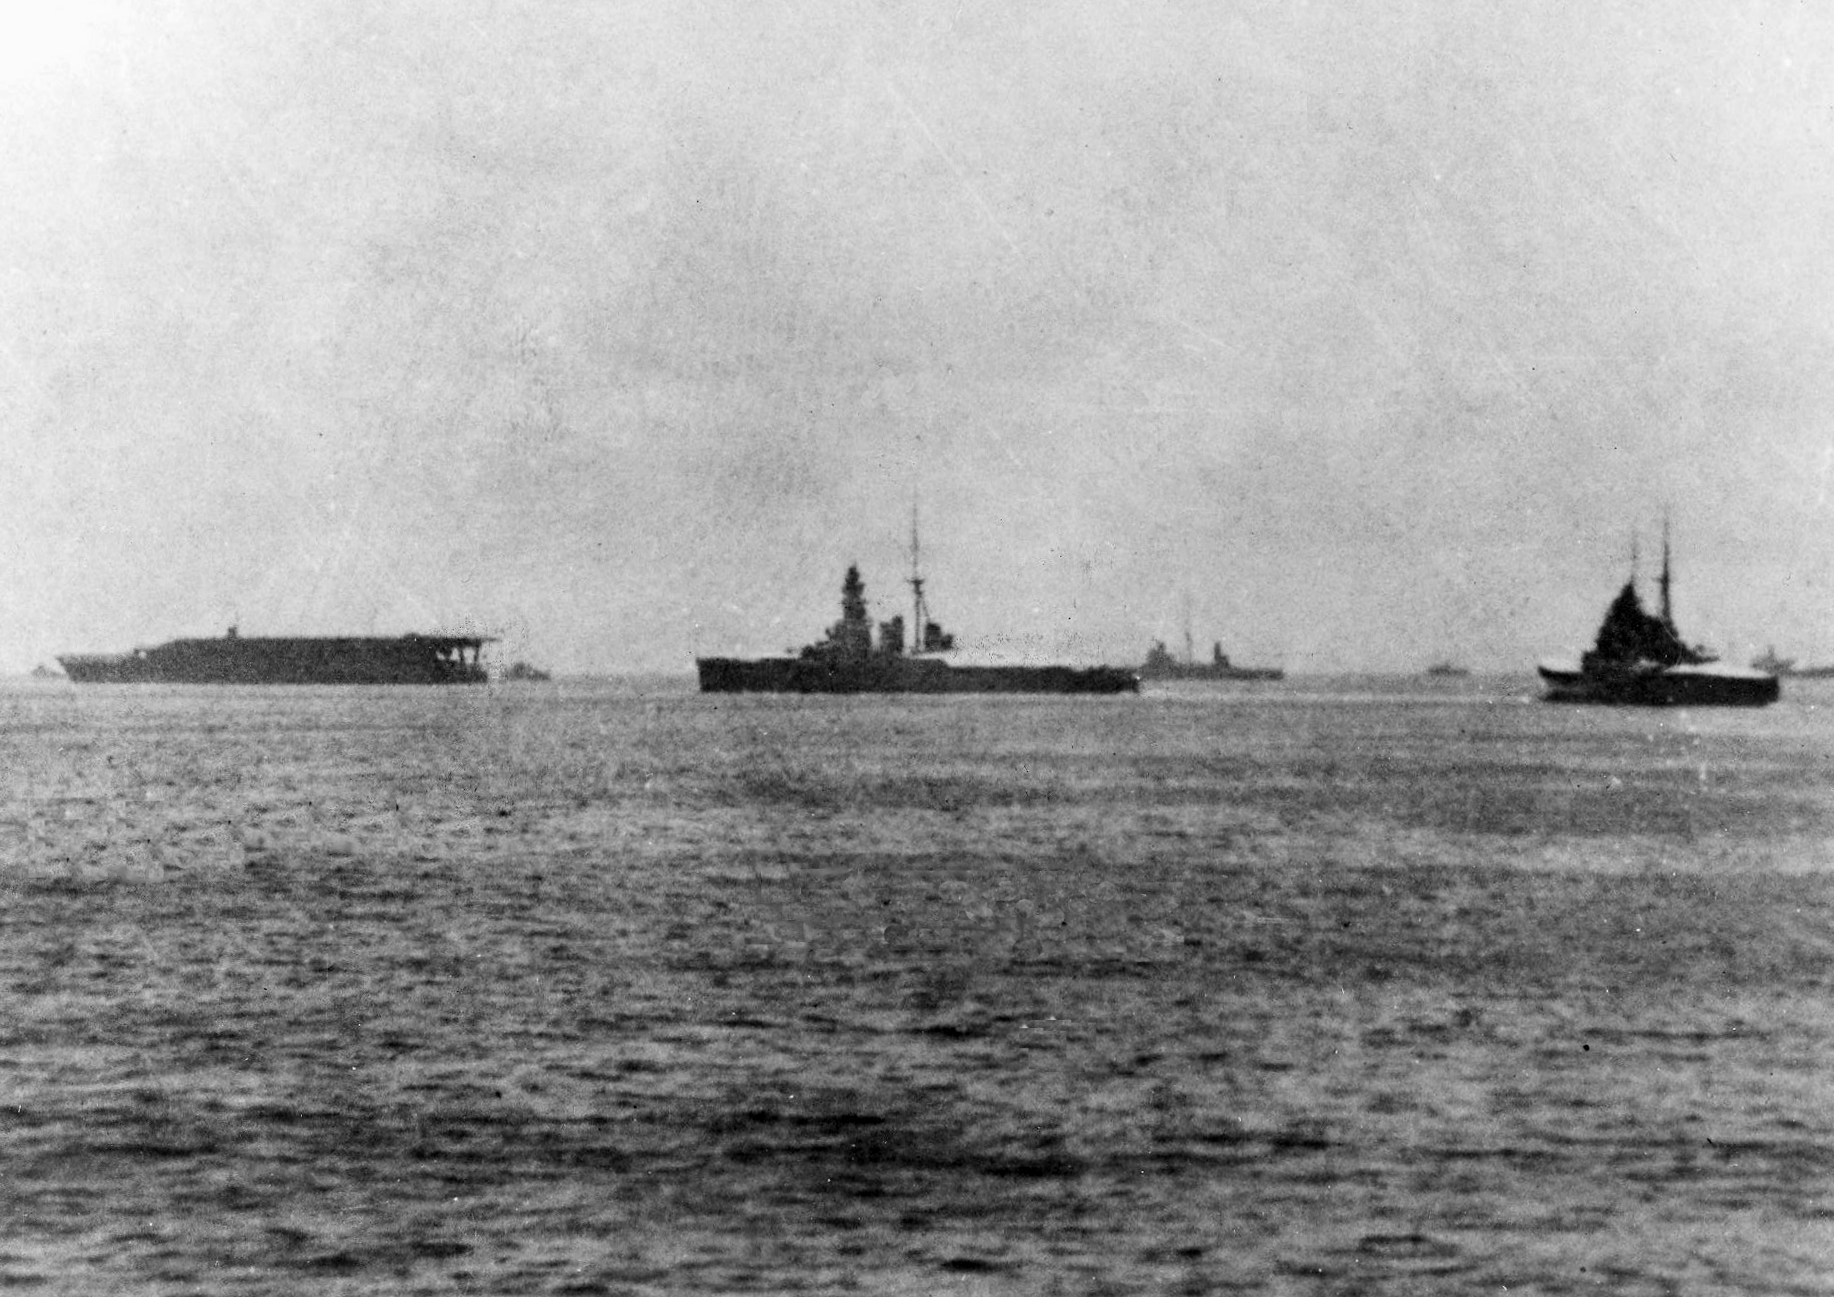 Kaga, Hiei, Kasuga, and a Takao-class cruiser in harbor, 1937